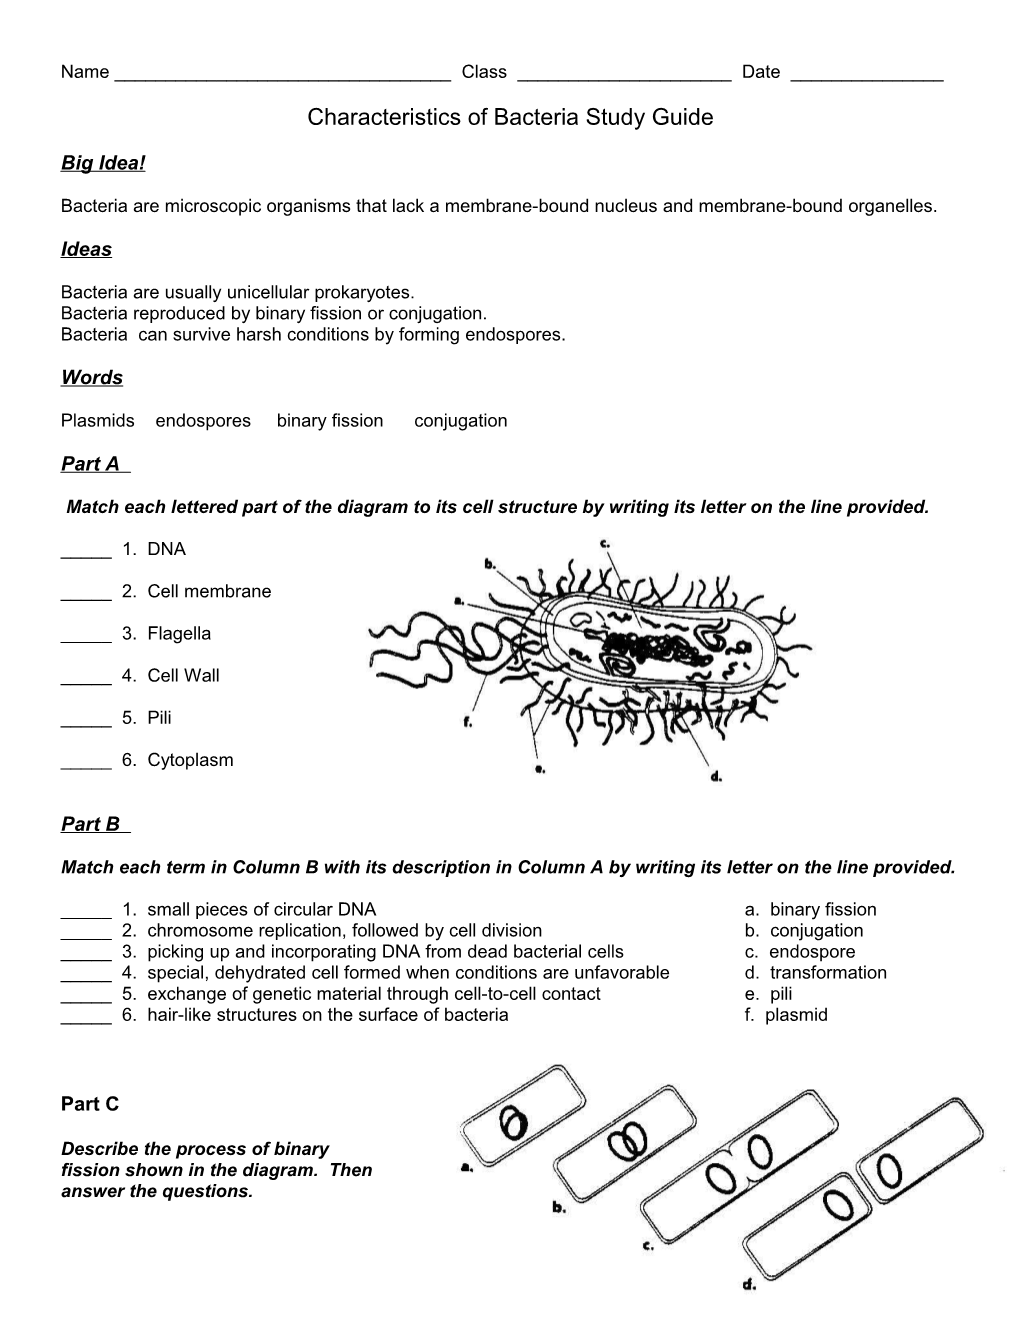 Characteristics of Bacteria Study Guide